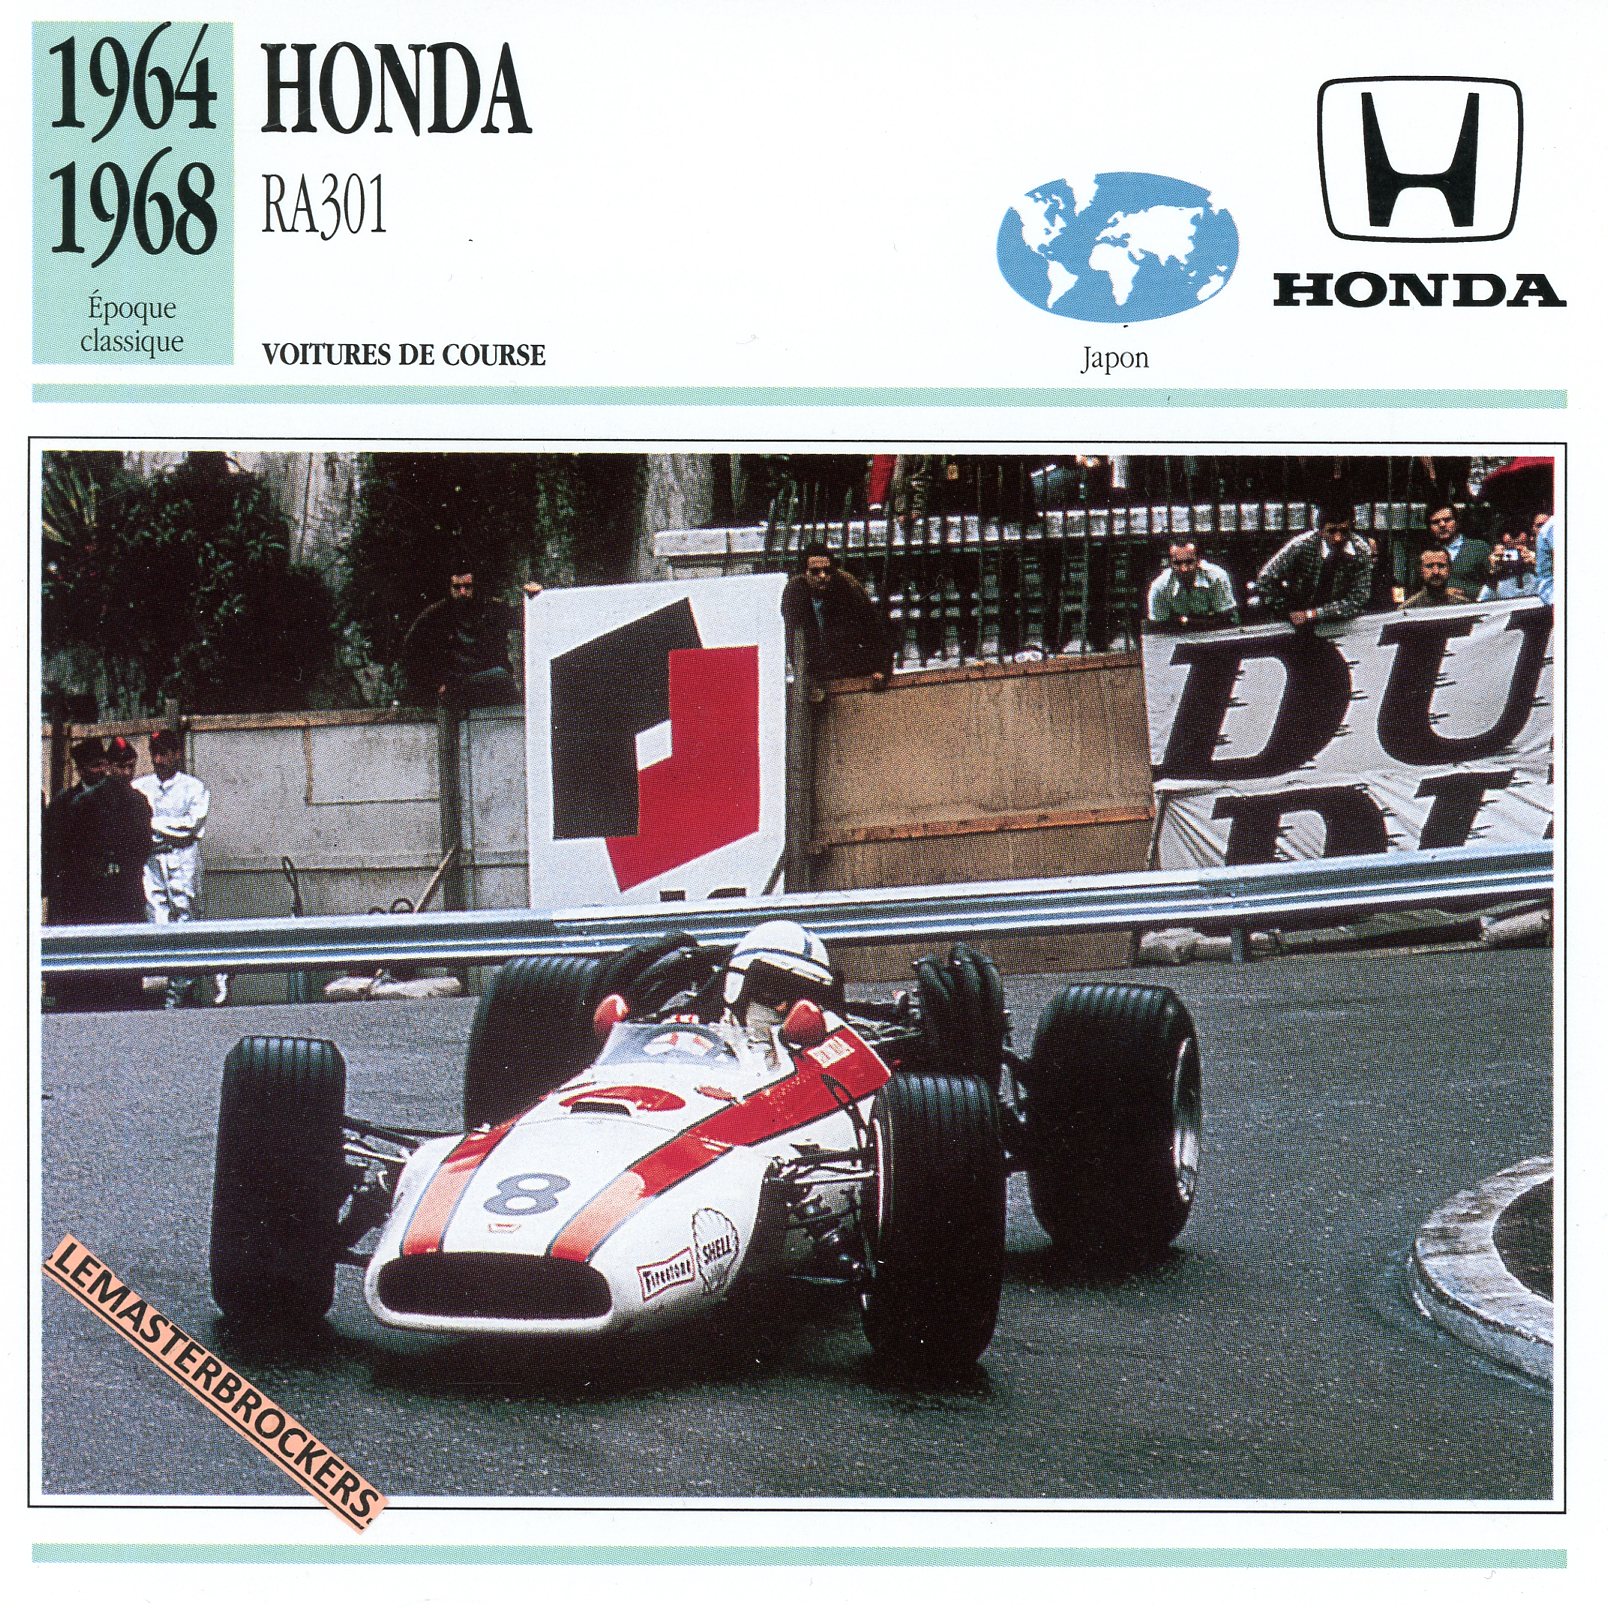 HONDA-RA301-F1-1964-1968-FICHE-AUTO-LEMASTERBROCKERS-CARD-CARS